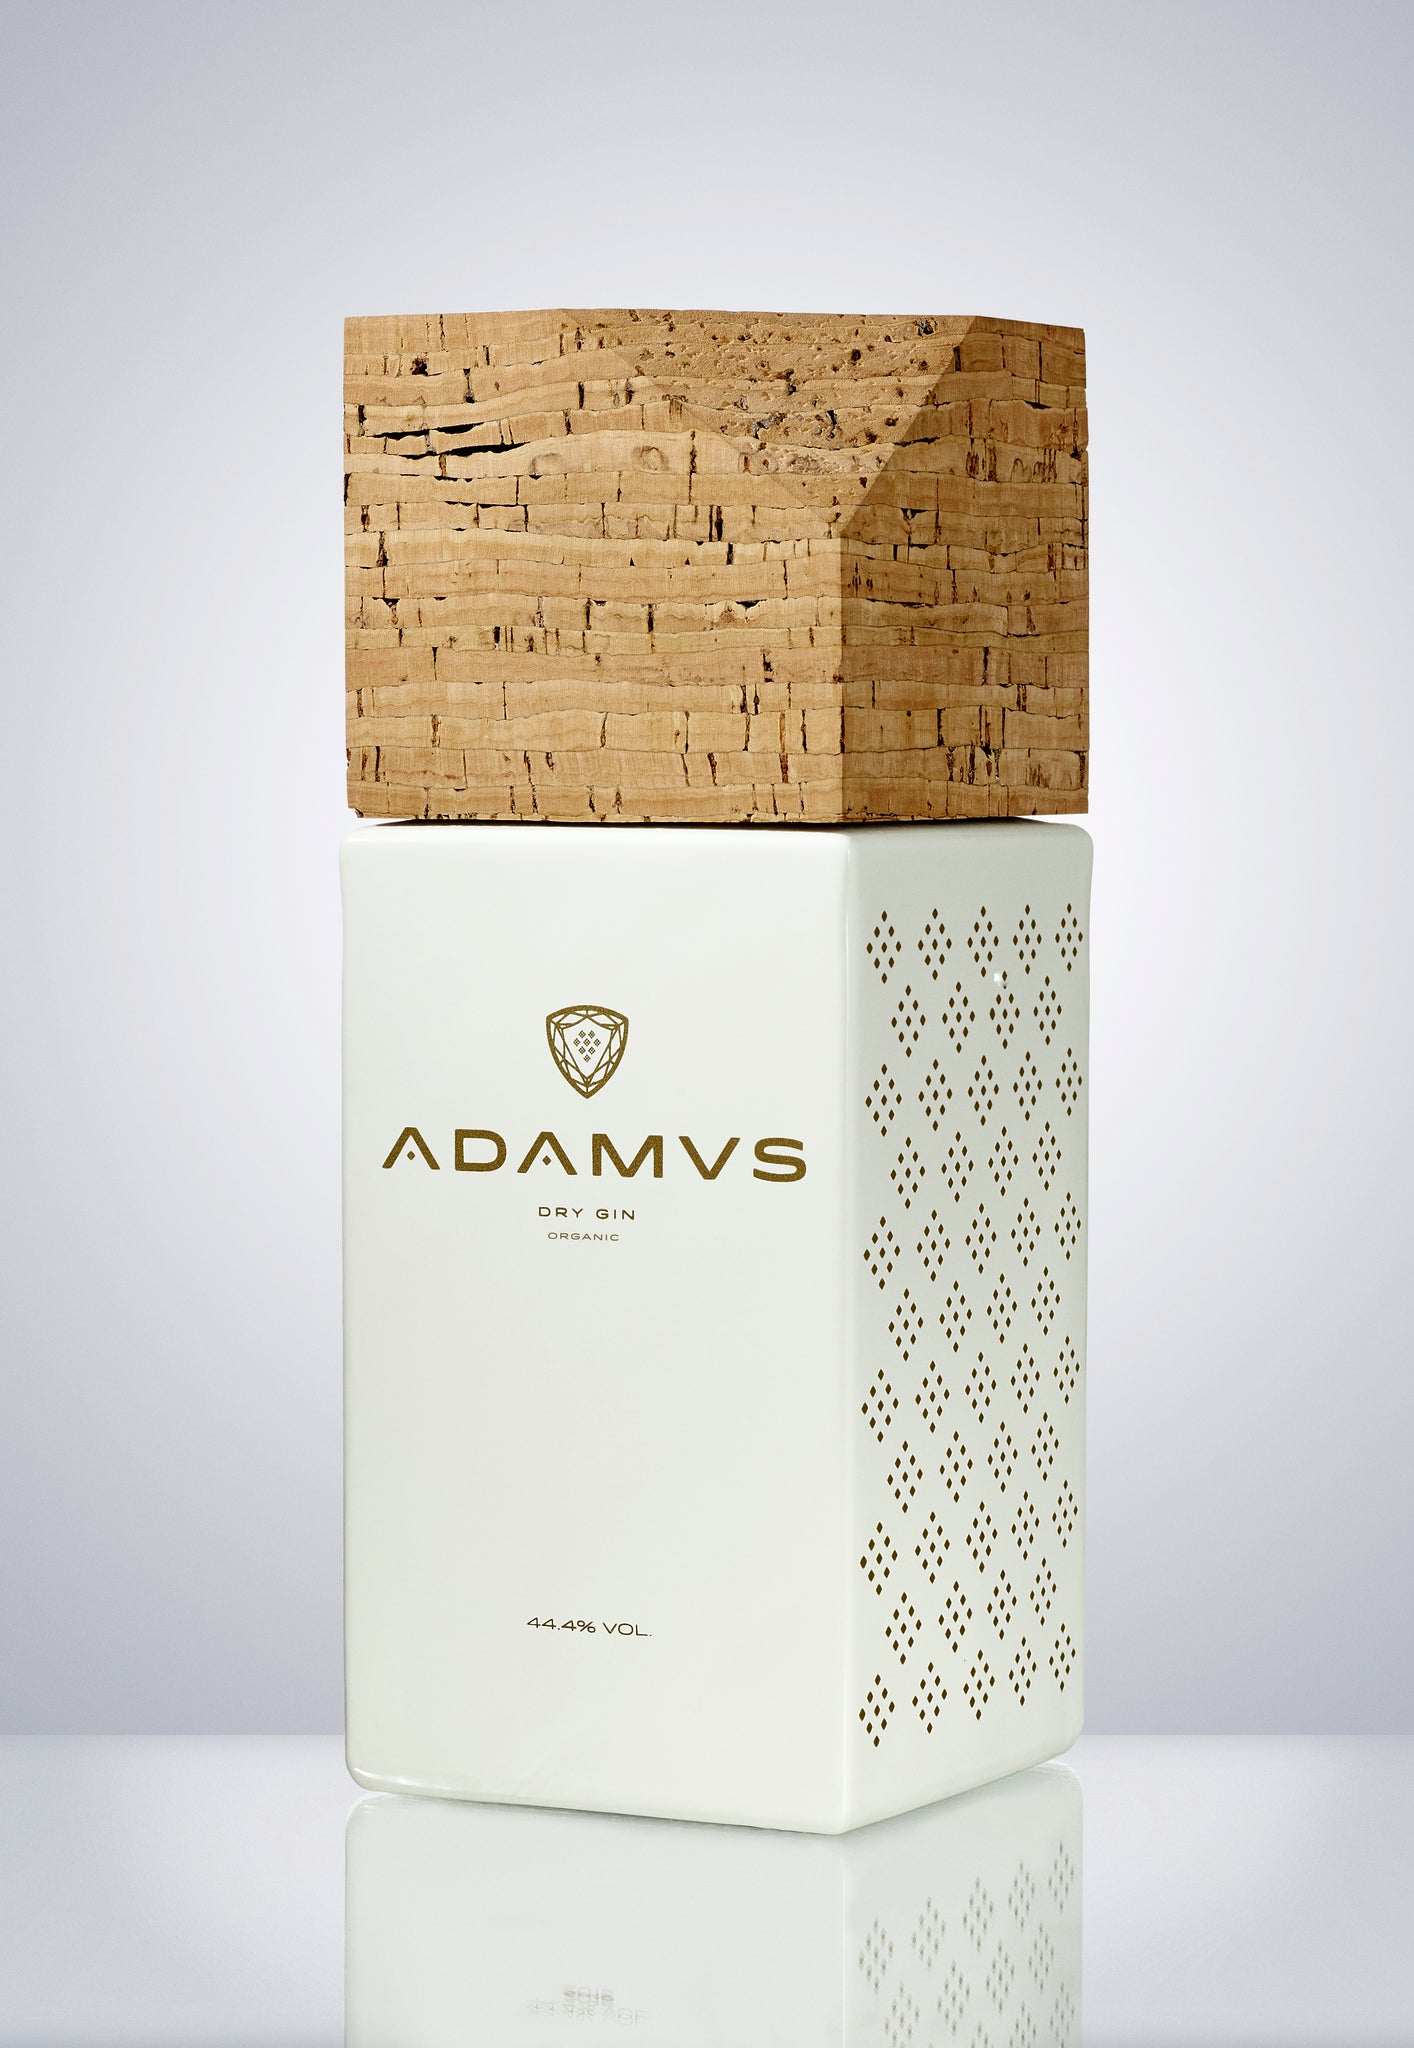 PACK 2 Adamus Organic Dry Gin + 1 Adamus Signature Edition 2021